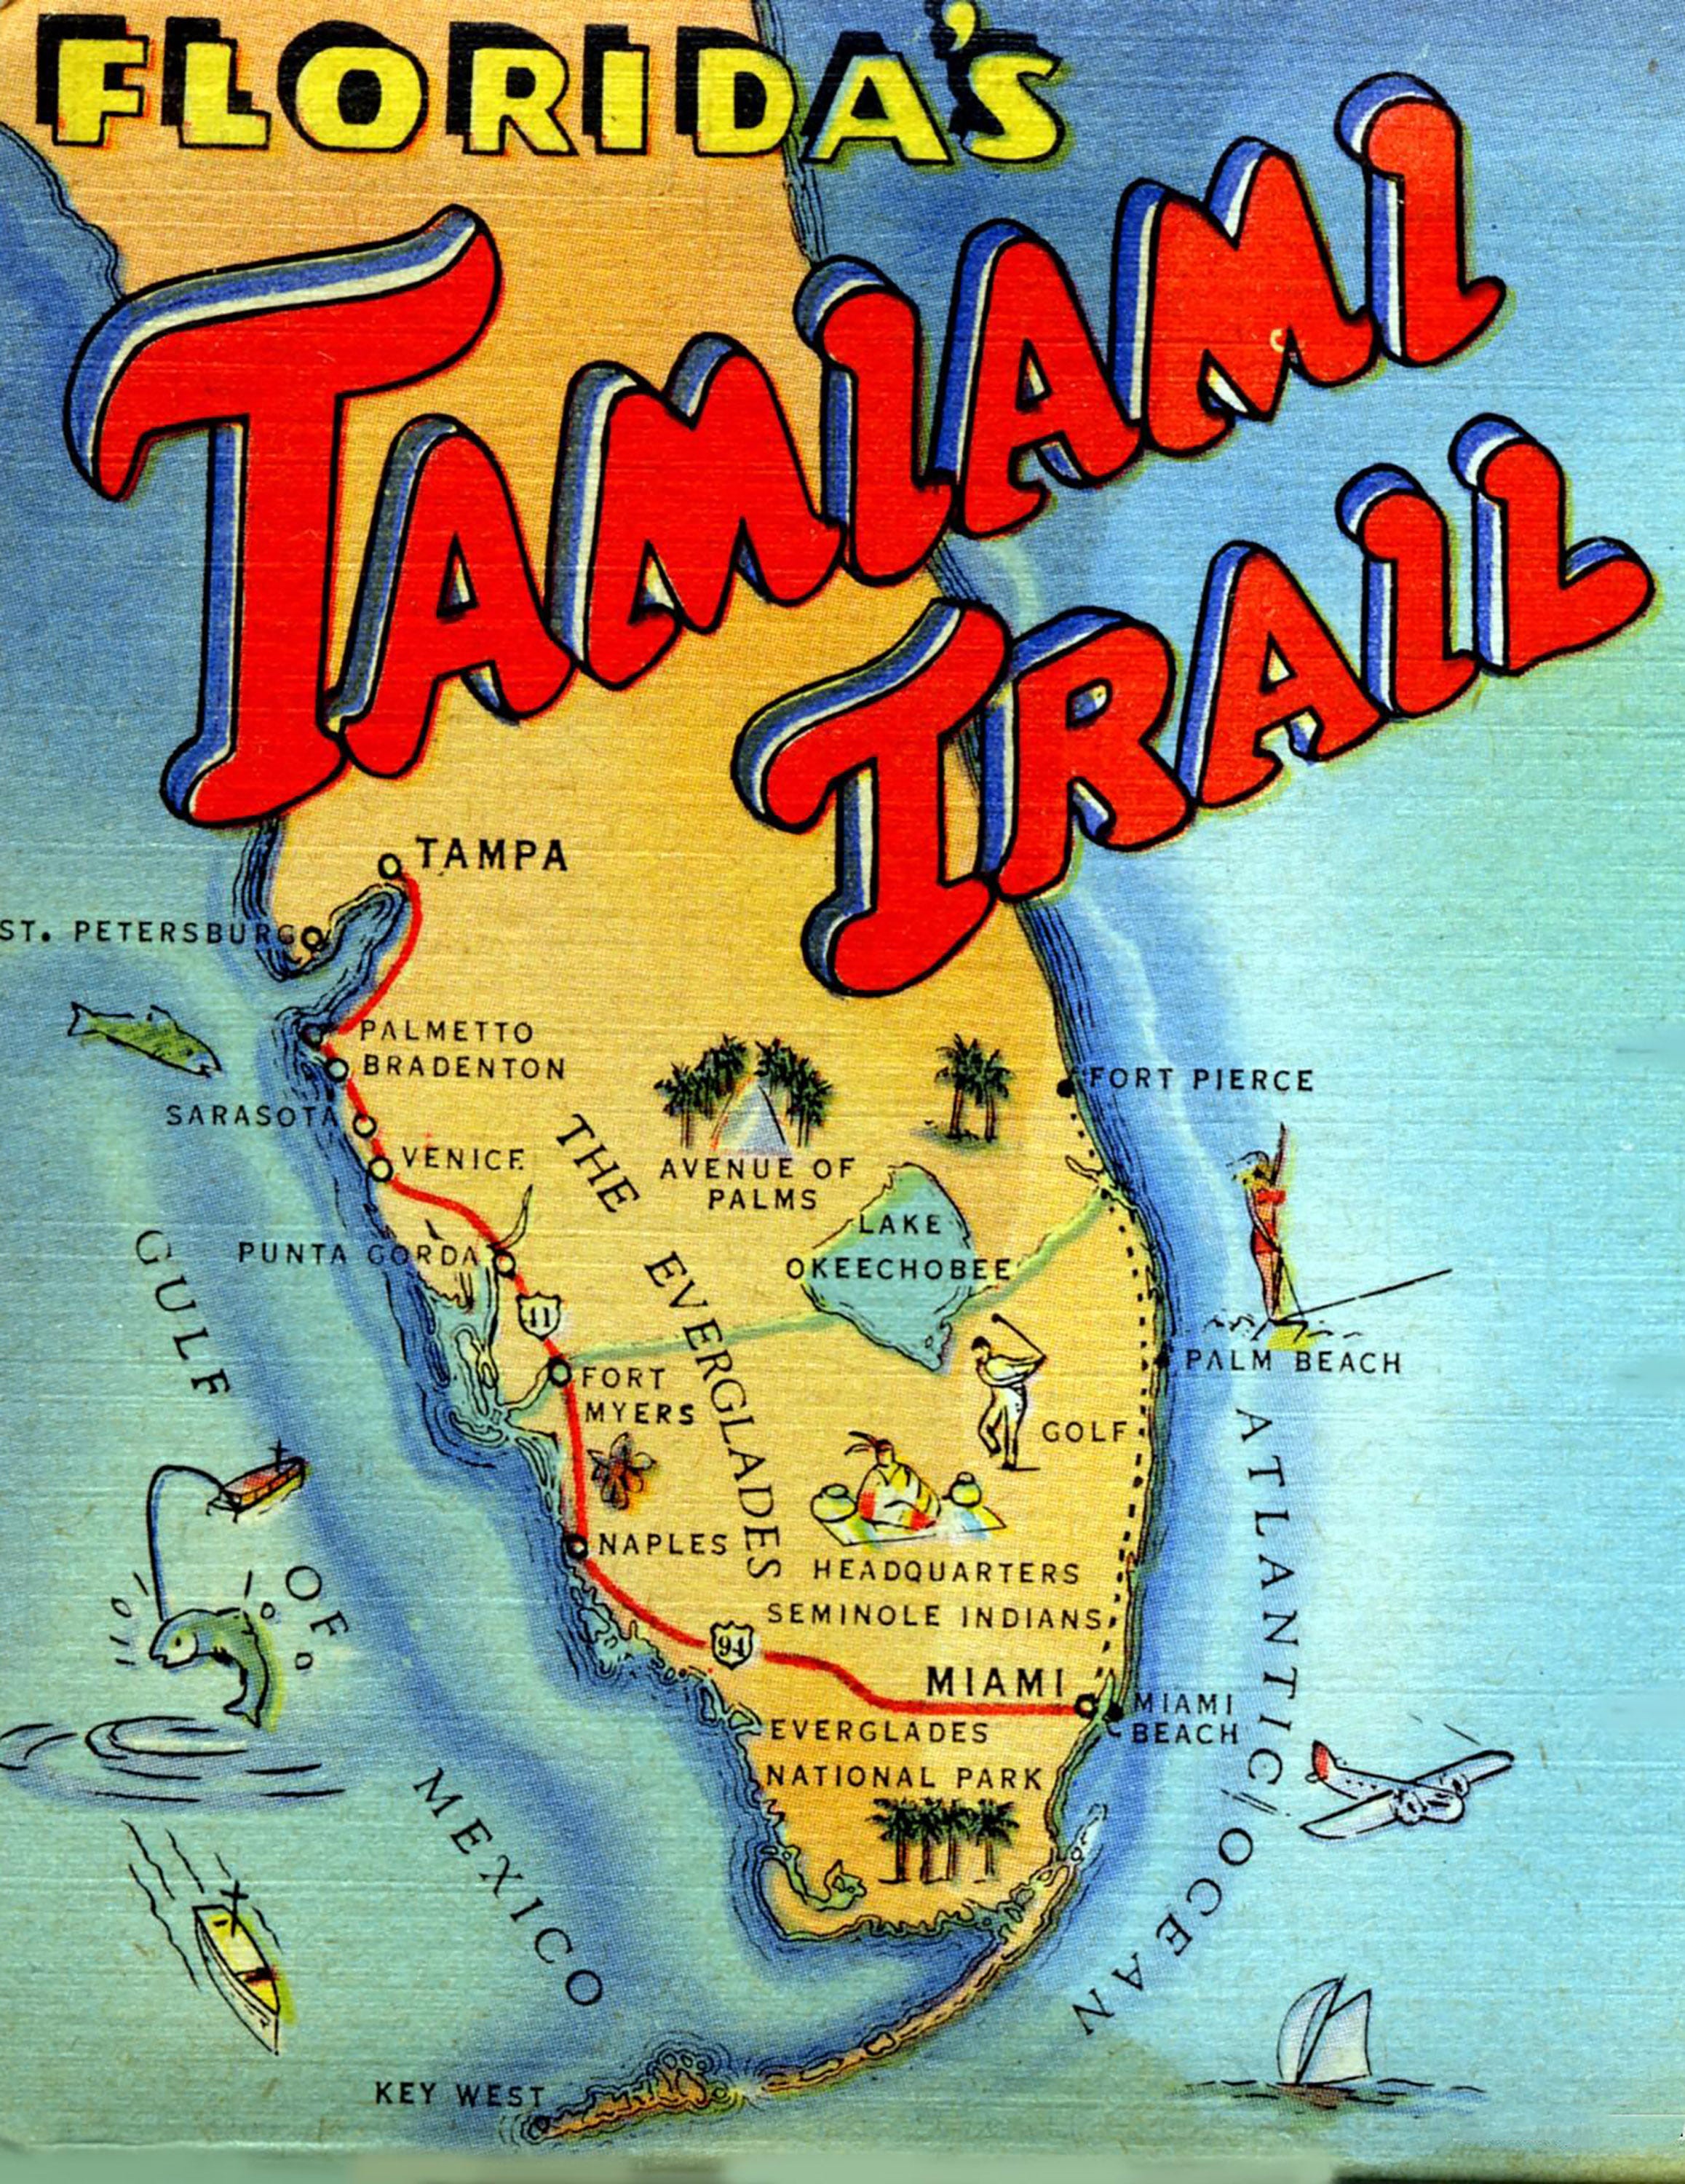 Tamiami Trail promotional, circa 1940s.